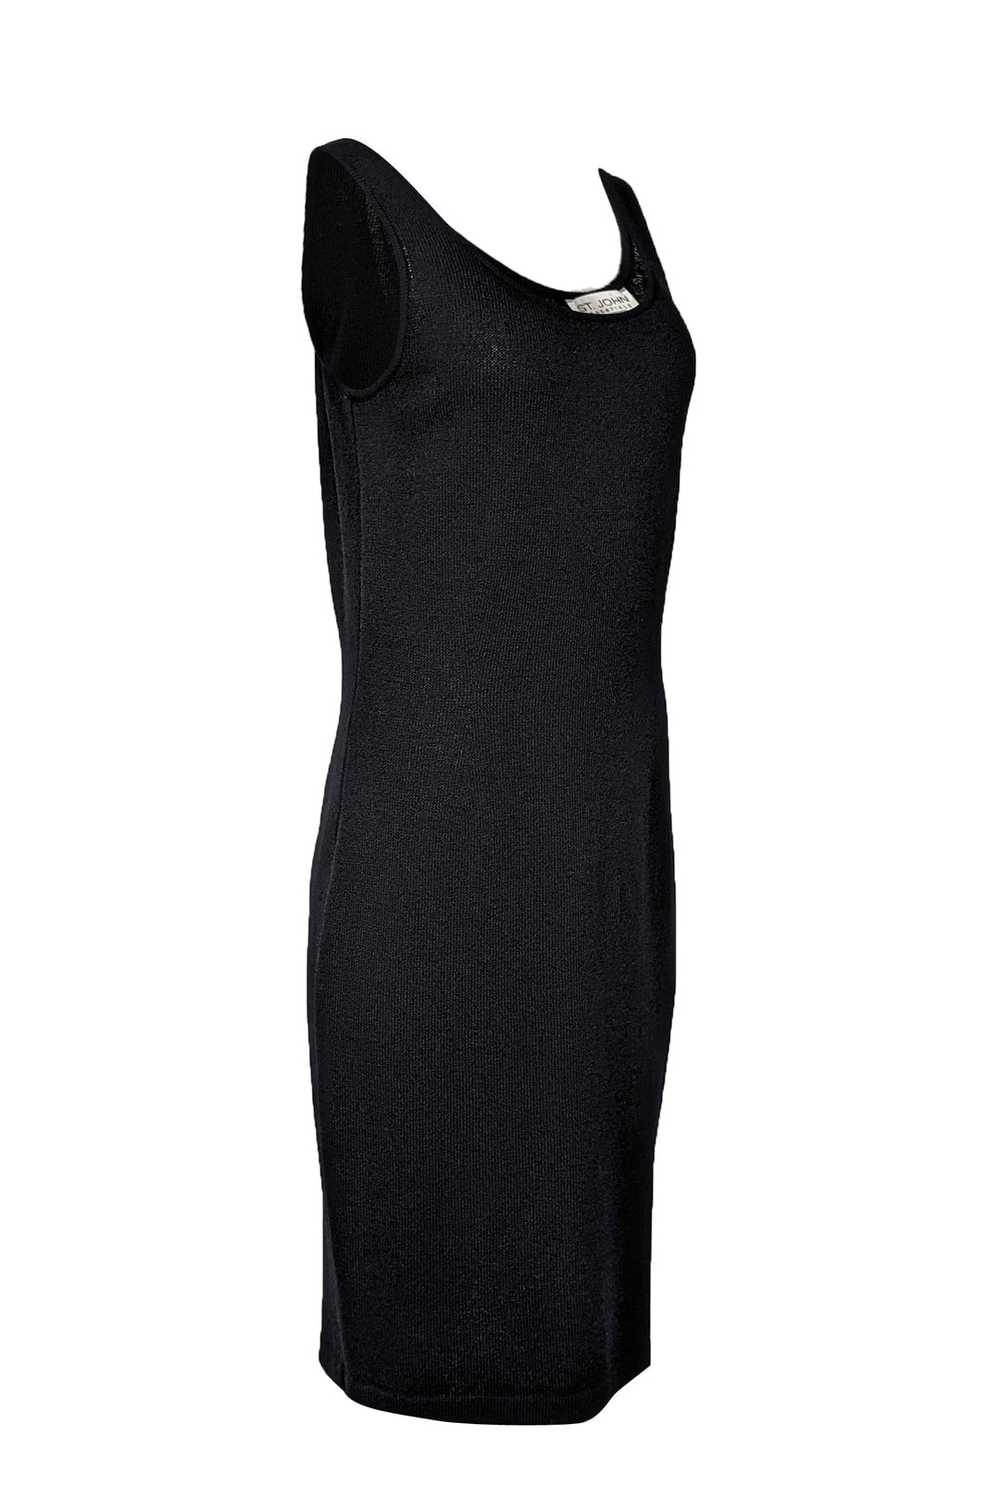 St. John - Dark Navy Knit Sleeveless Midi Dress S… - image 2